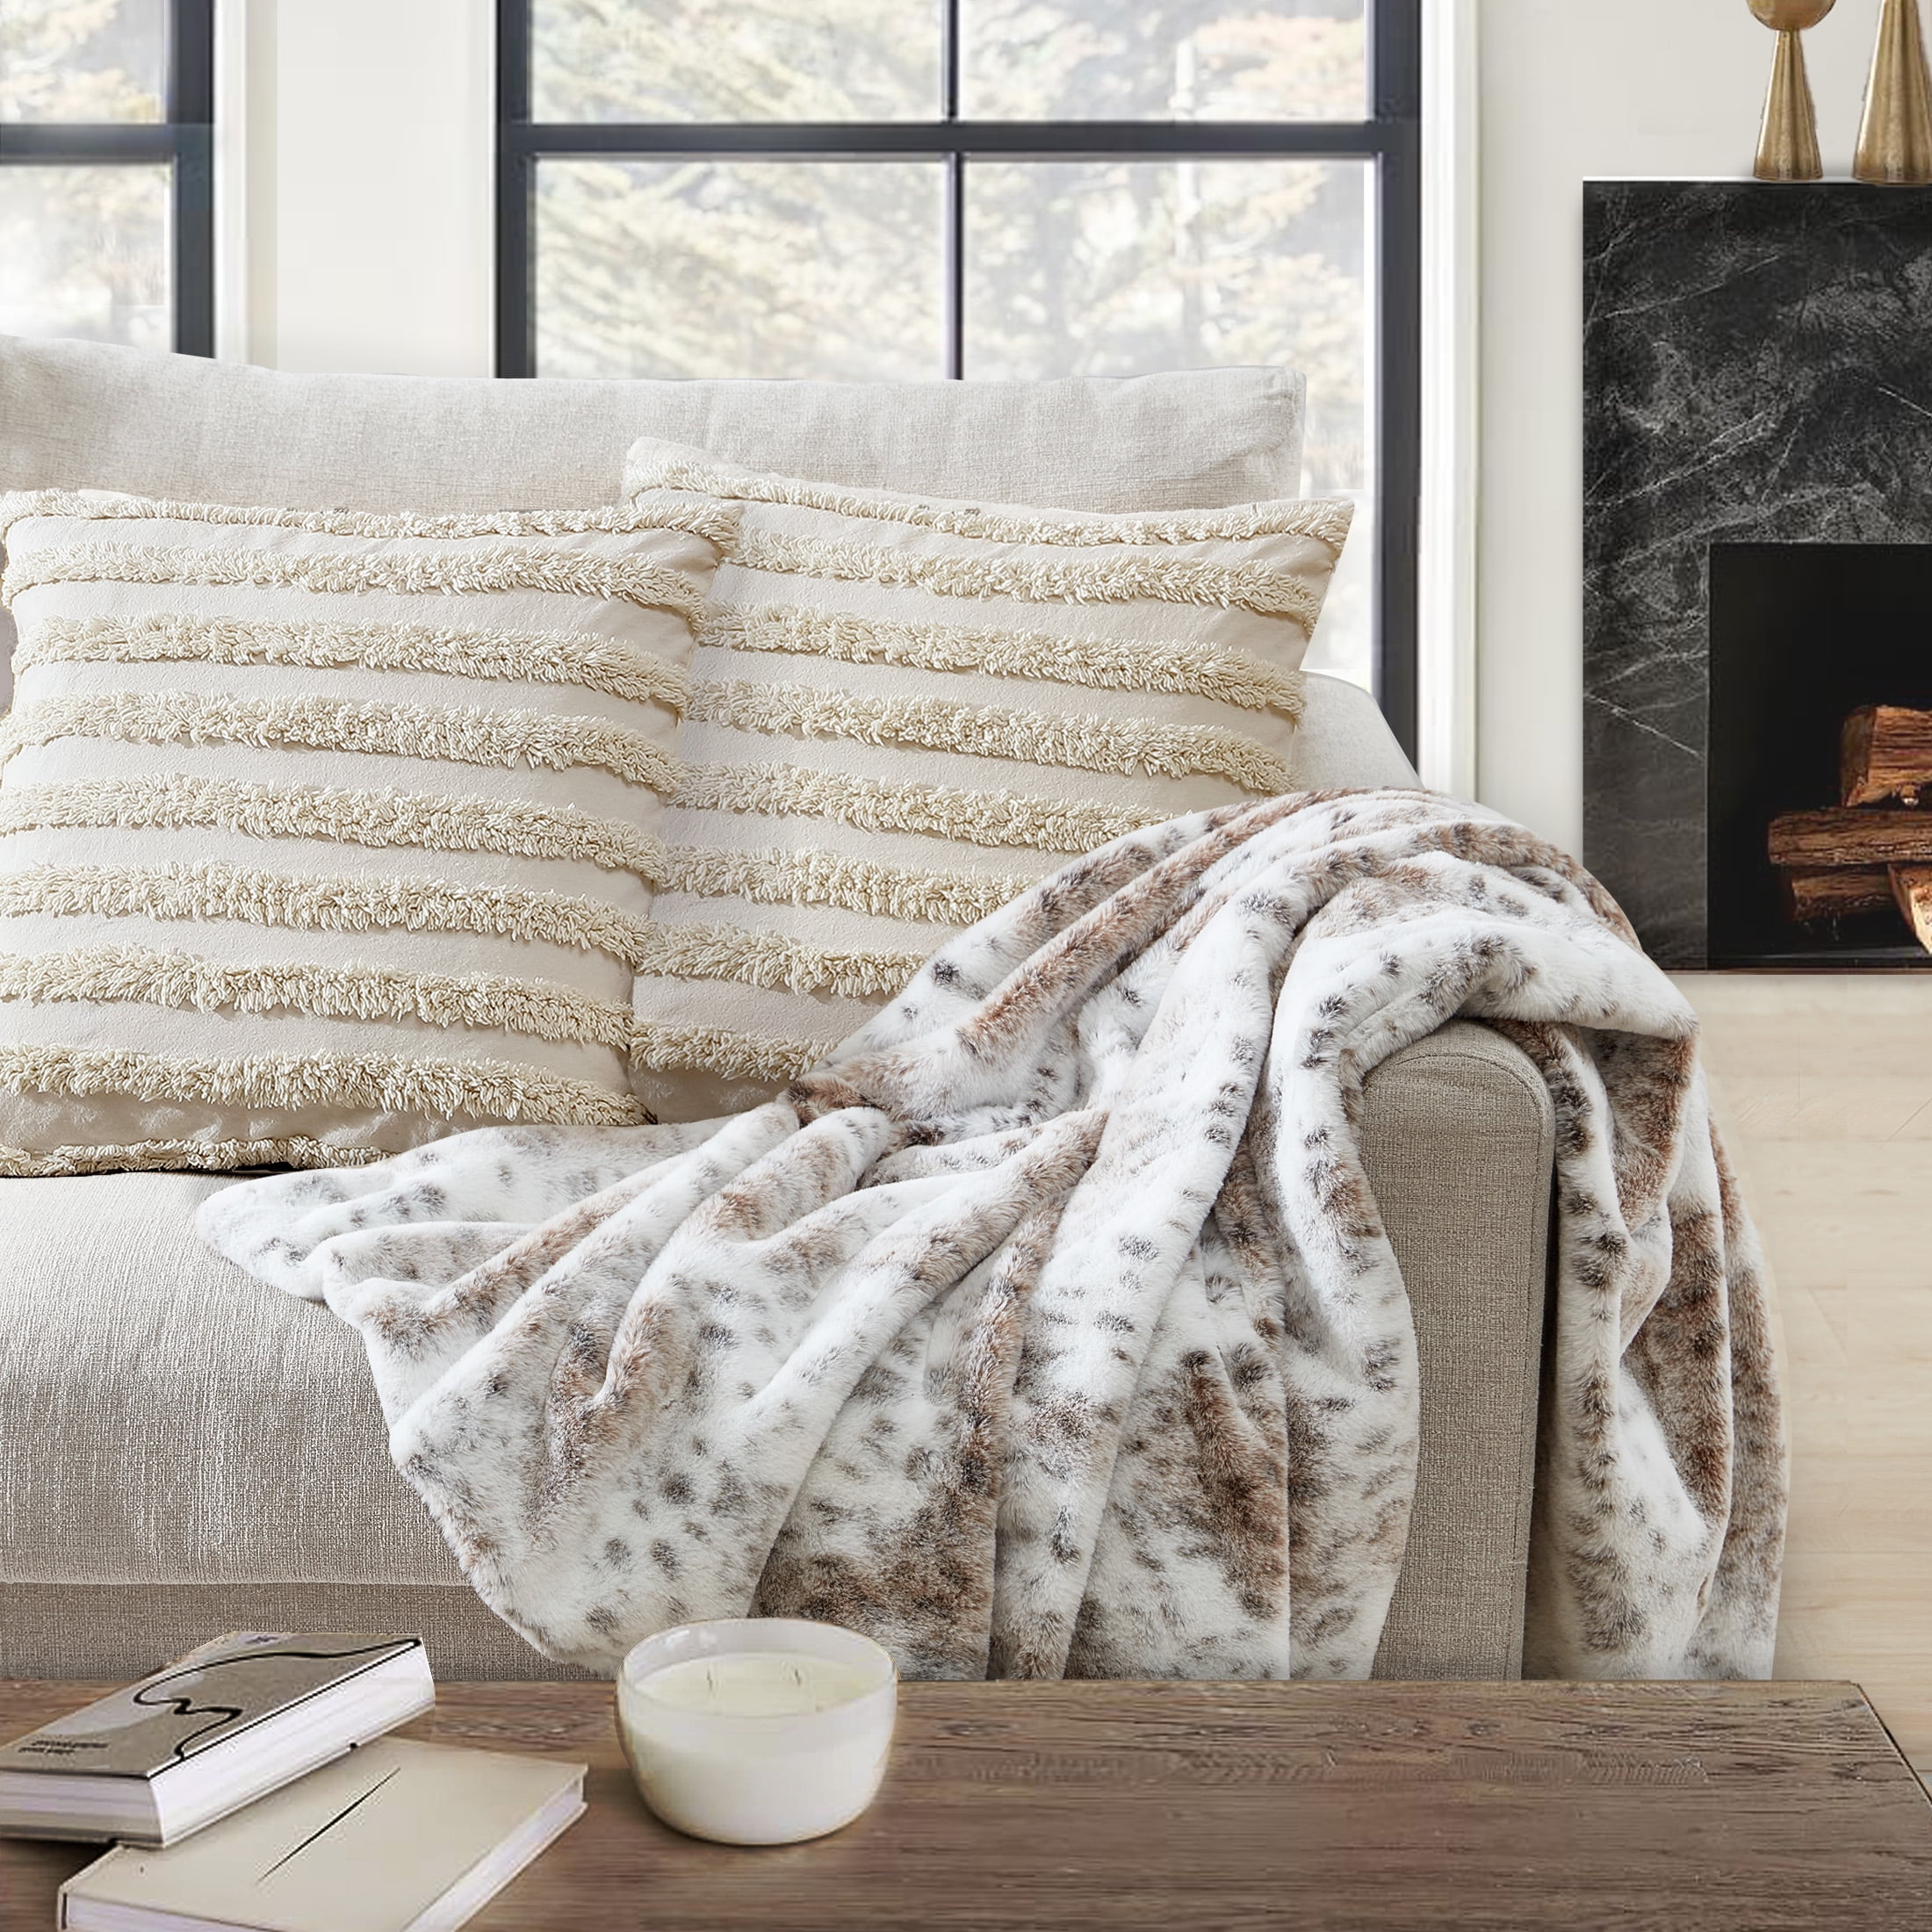 Homes & Faux Fur Blanket, White Ruched Faux Fur, Standard Throw Walmart.com